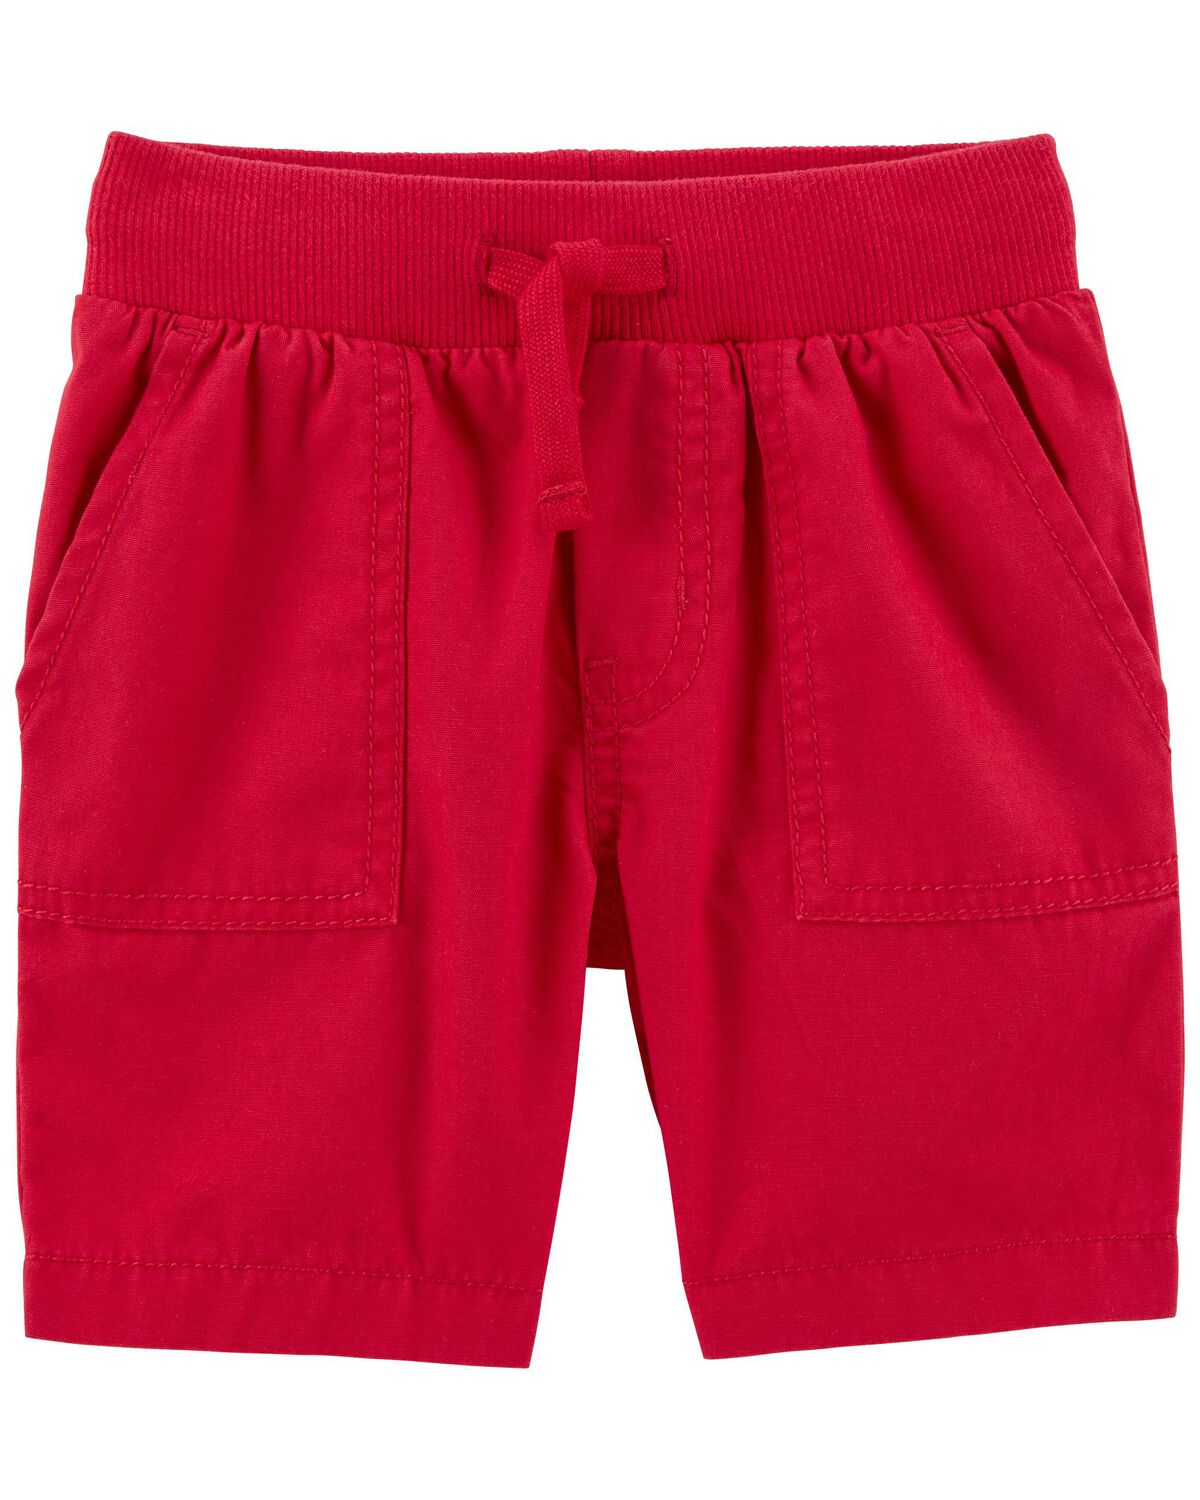 Red Toddler Drawstring Canvas Shorts | oshkosh.com